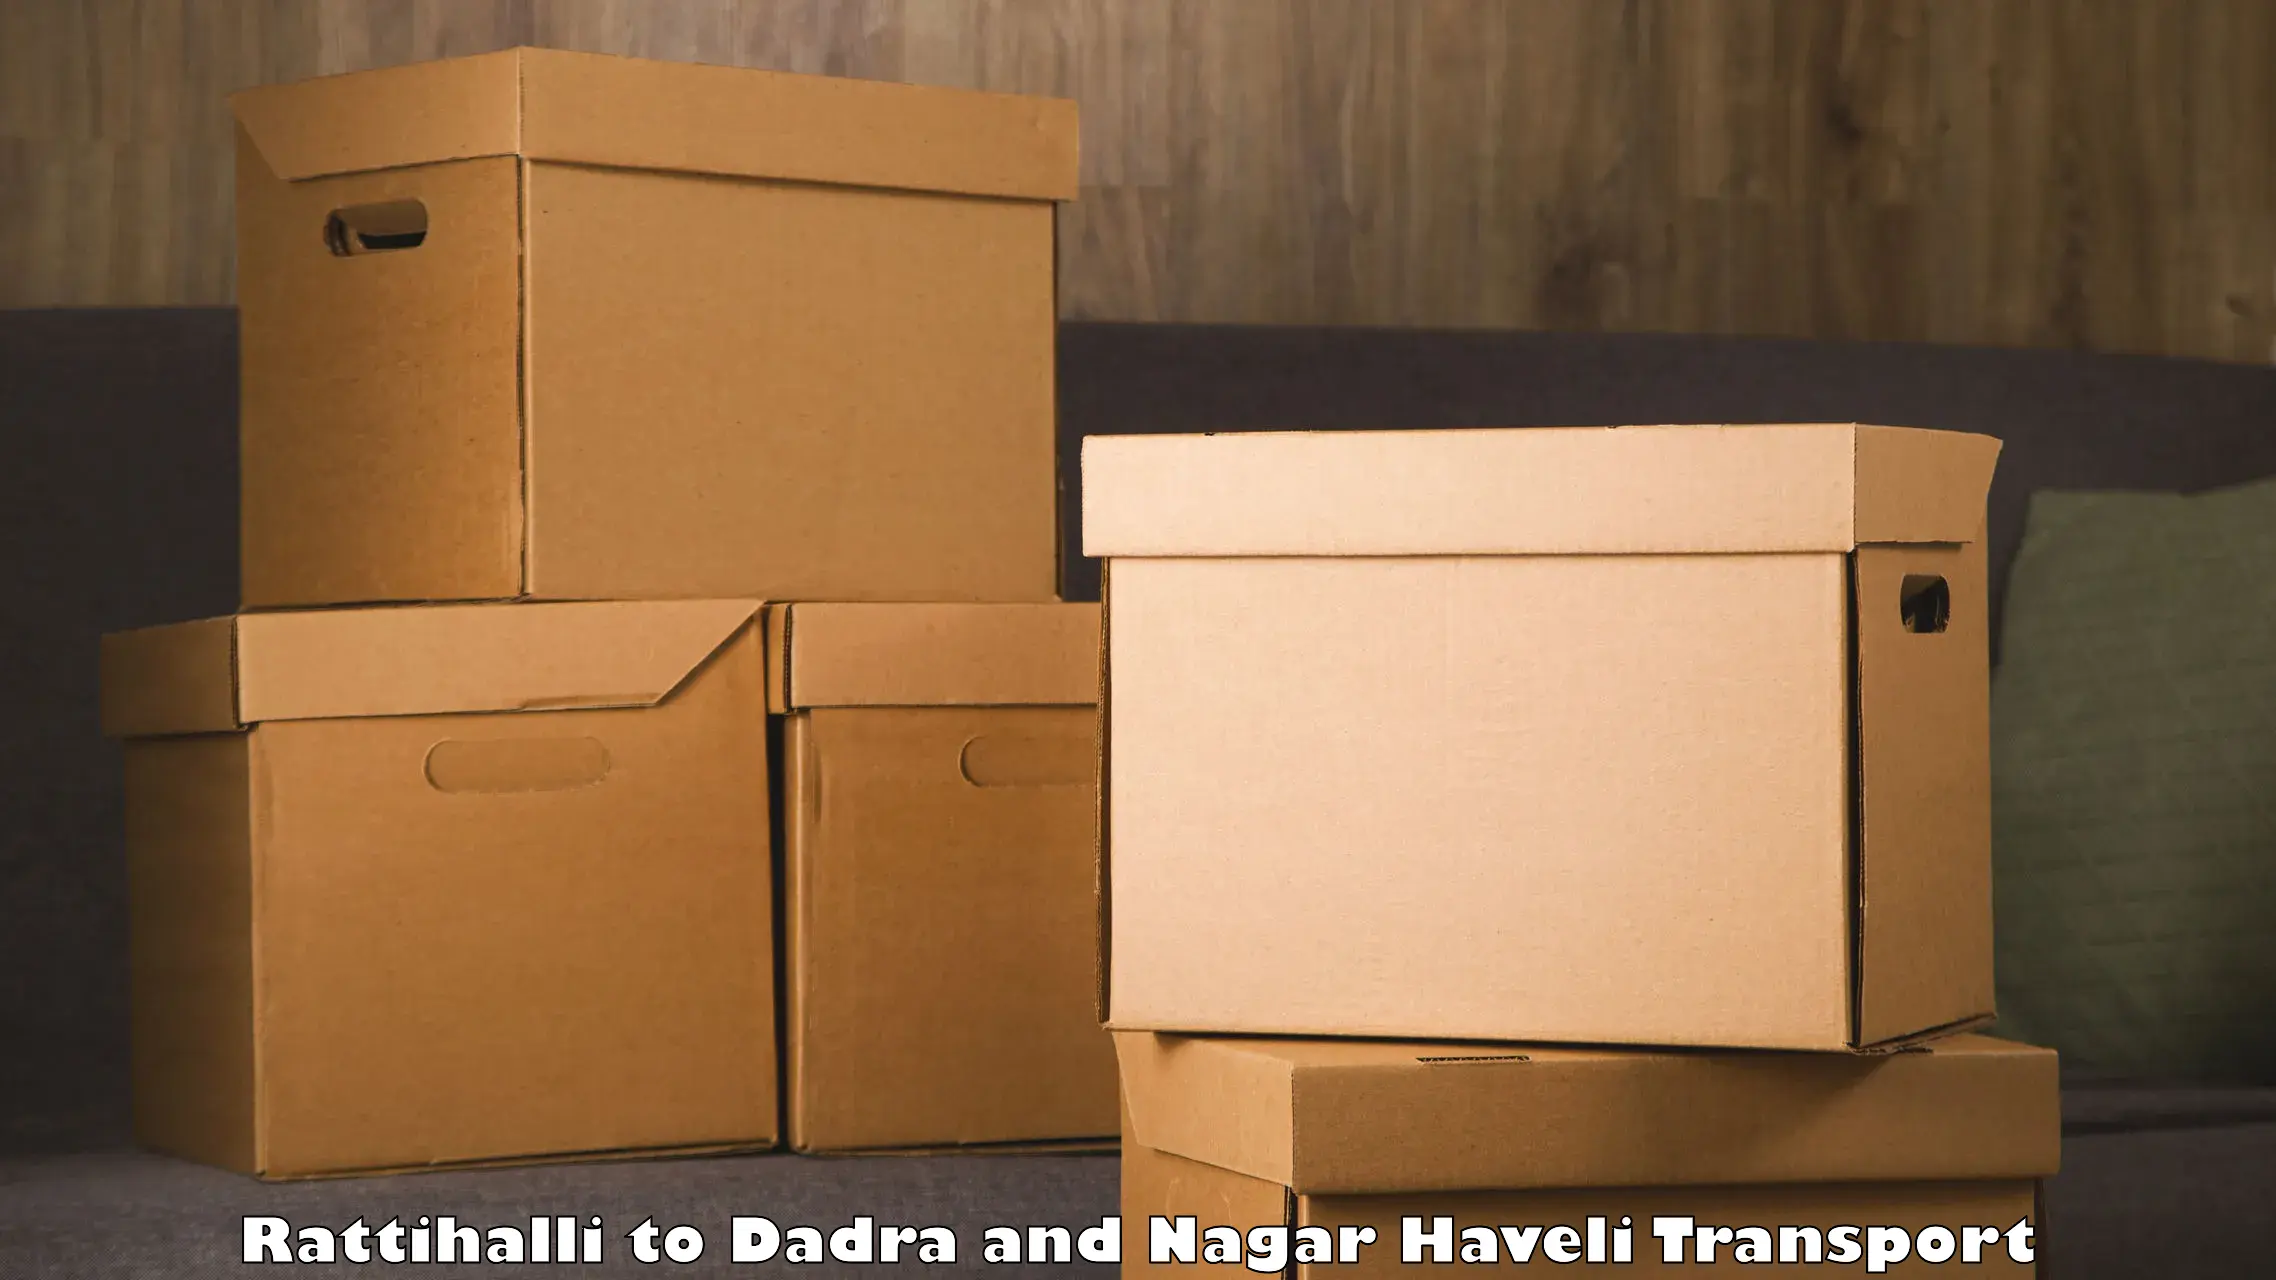 Shipping partner Rattihalli to Dadra and Nagar Haveli